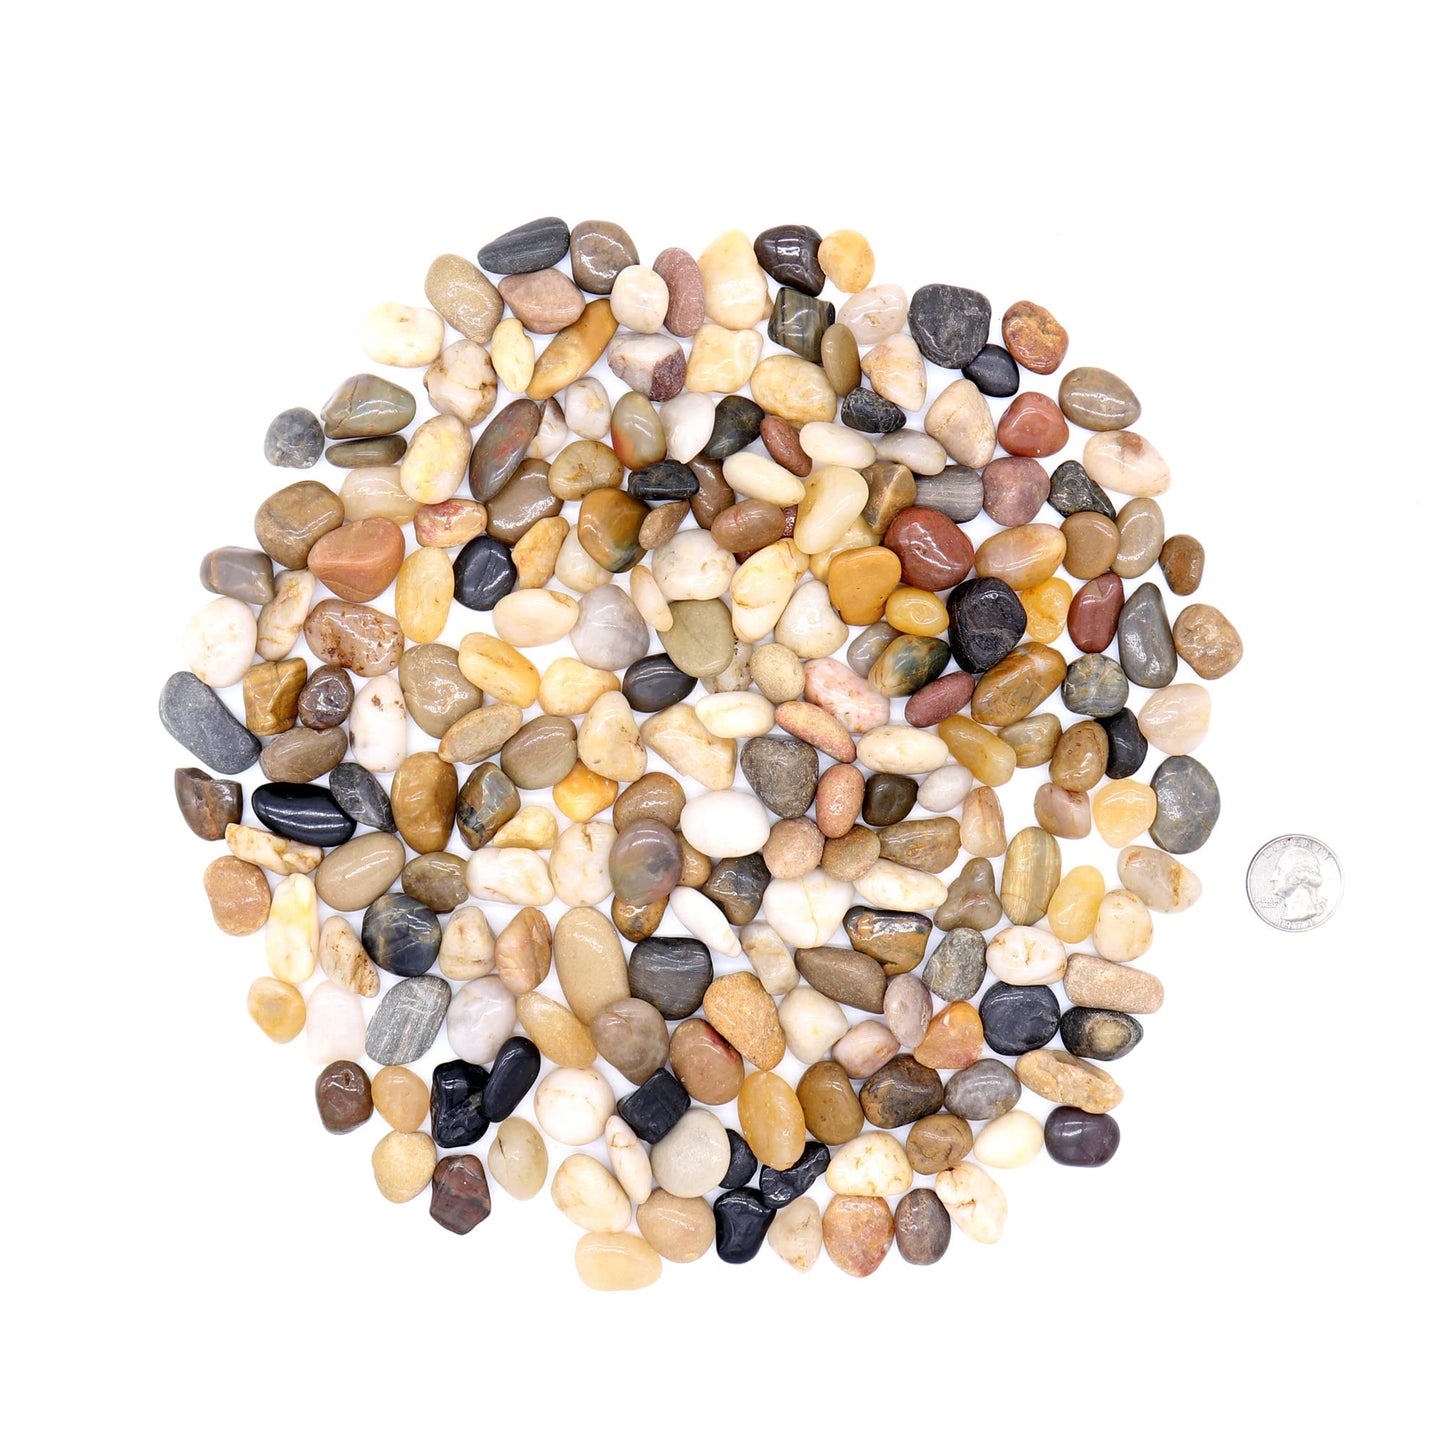 Premium Pebbles Rocks for Plants. Mixed Colors Decorative Polished Pebbles. 3/8 Inch – 10 lbs for Plants, Garden, Landscaping, Succulents, pots, Plants (XSM (0.375 Inch), Mixed Color - Polished, 10)